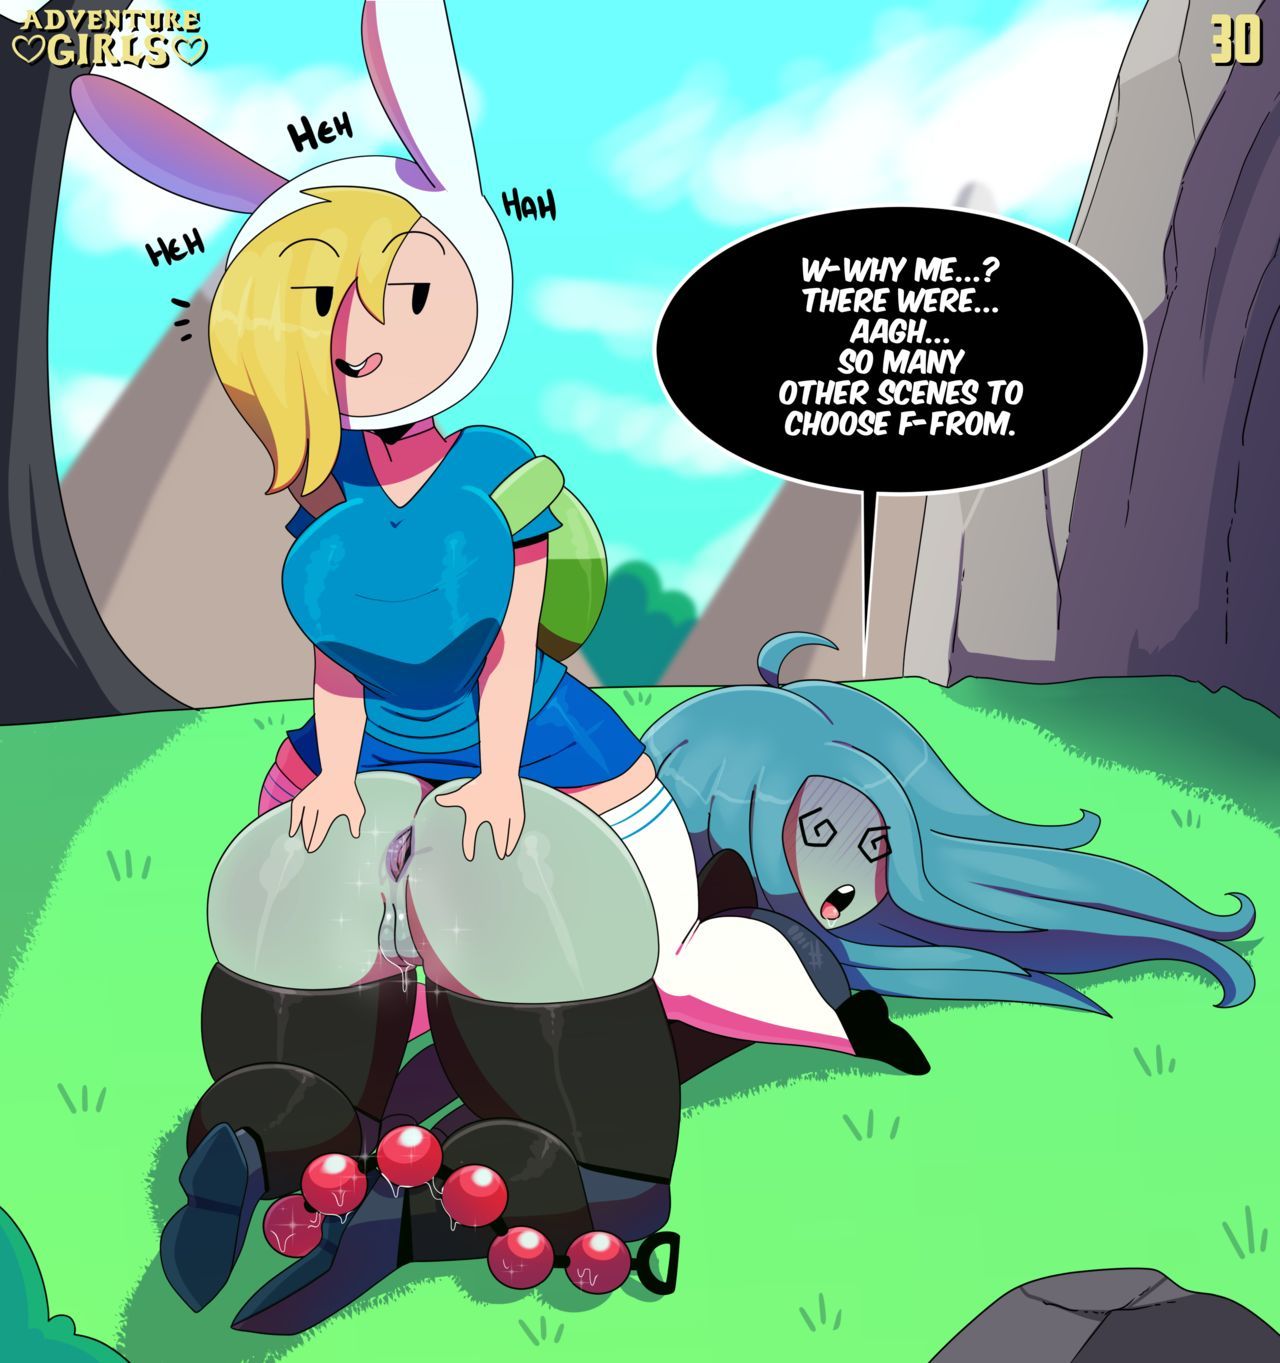 Adventure Girls - Somescrub [Adventure Time] page 30